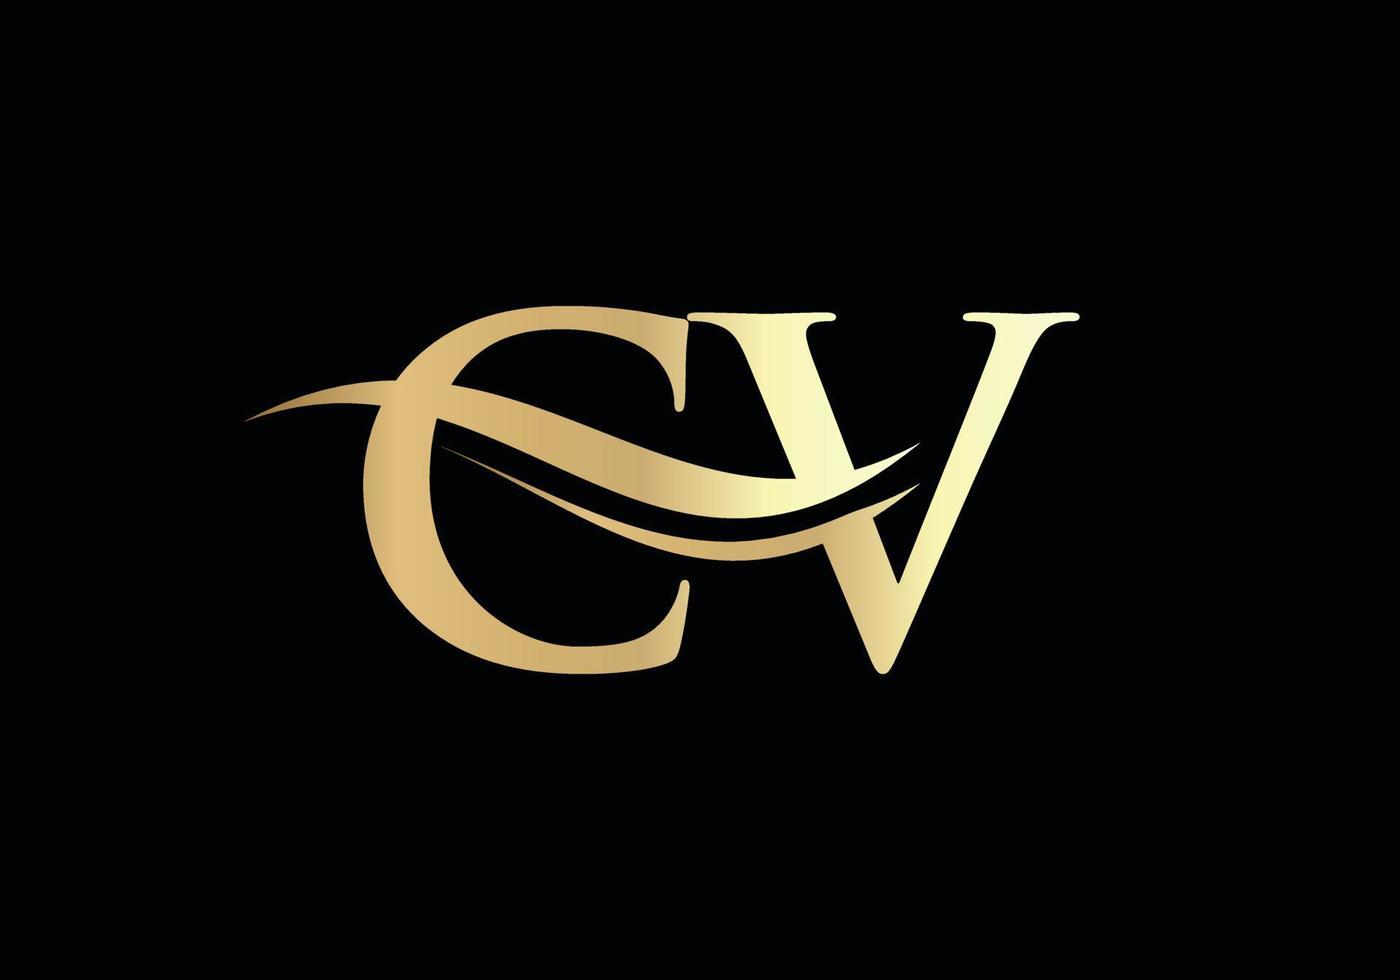 eerste gekoppeld brief CV logo ontwerp. modern brief CV logo ontwerp vector met modern modieus